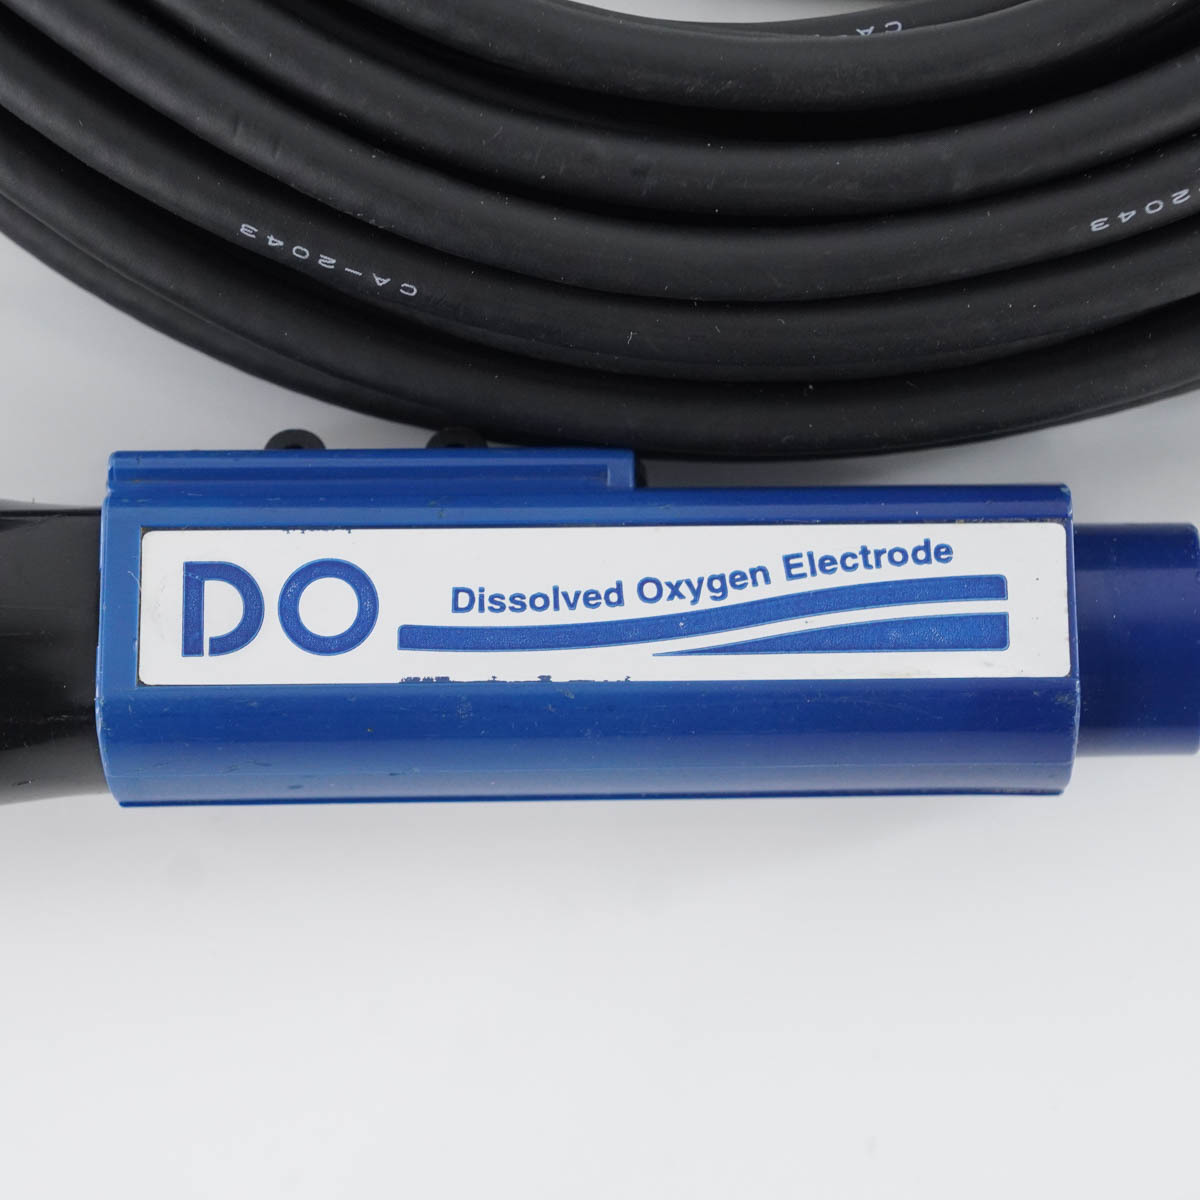 [DW] 8日保証 4台入荷 OE-270AA(11) TOA DKK 東亜DKK Dissolved Oxygen Electrode 溶存酸素電極 DO電極 取扱説明書[05367-0016]の画像4